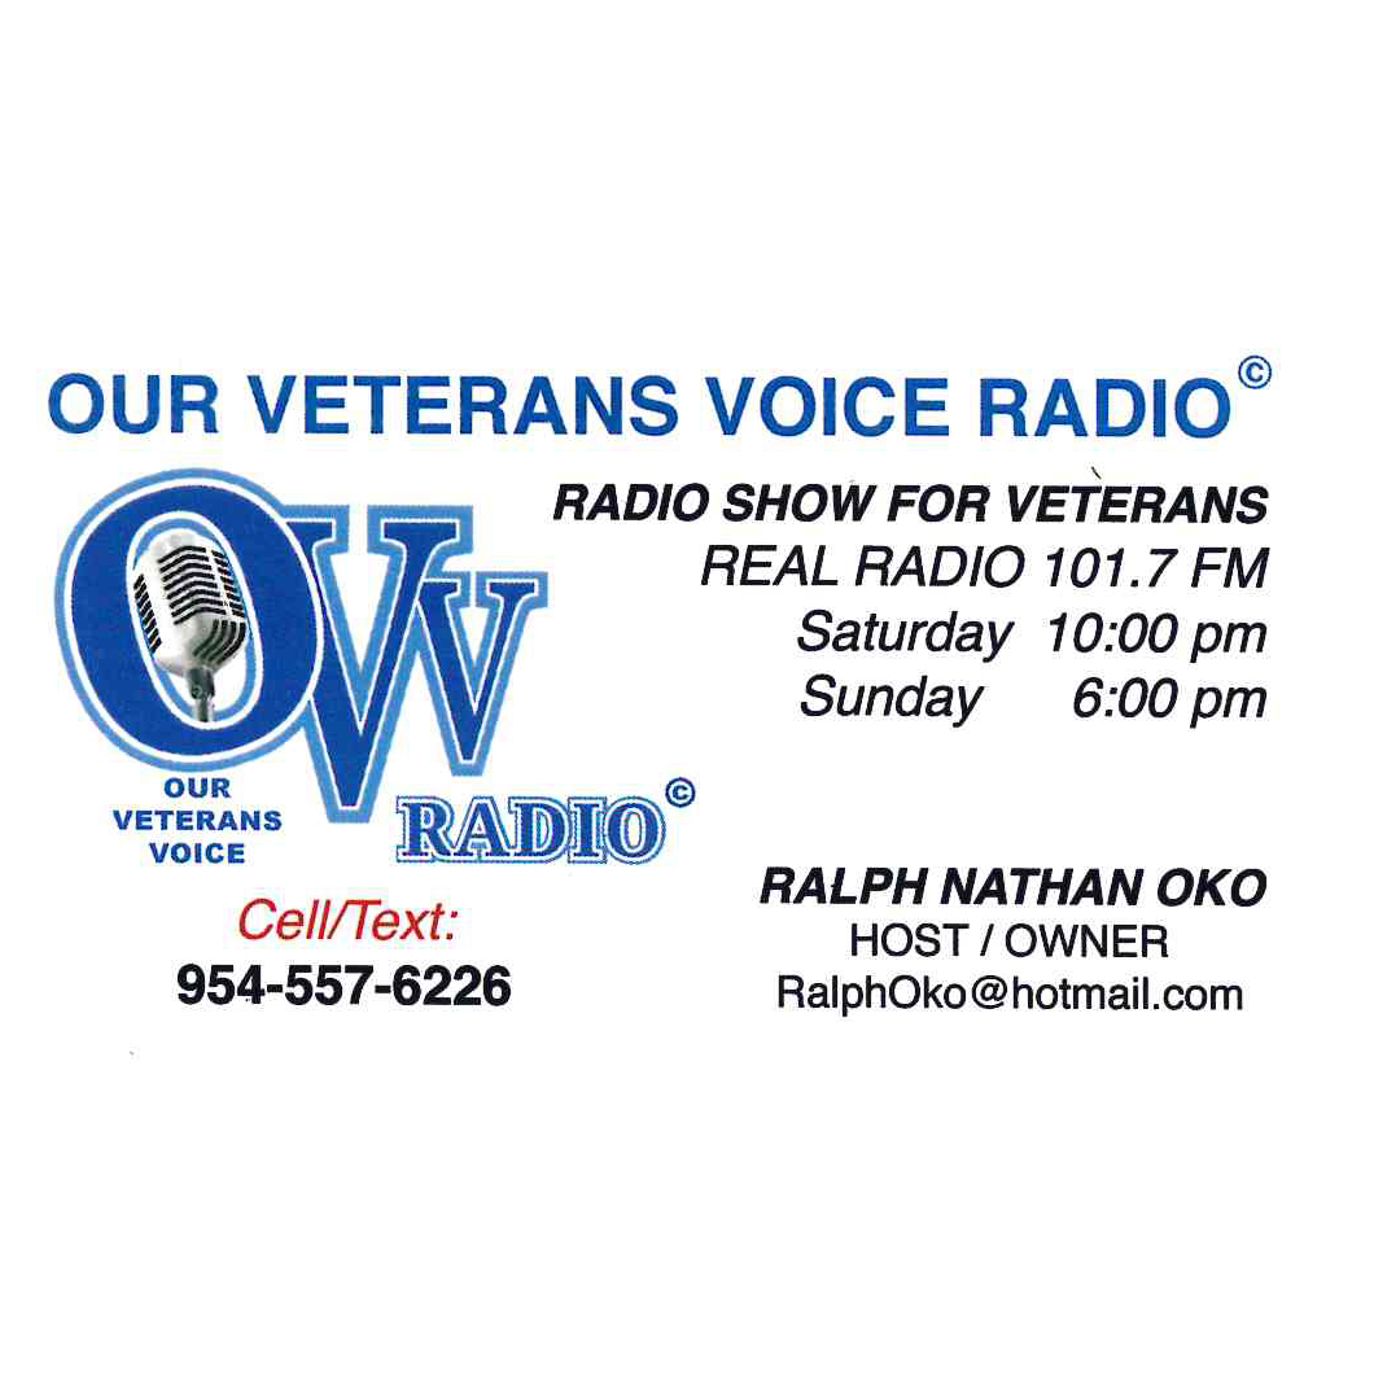 Our Veterans Voice Radio Show